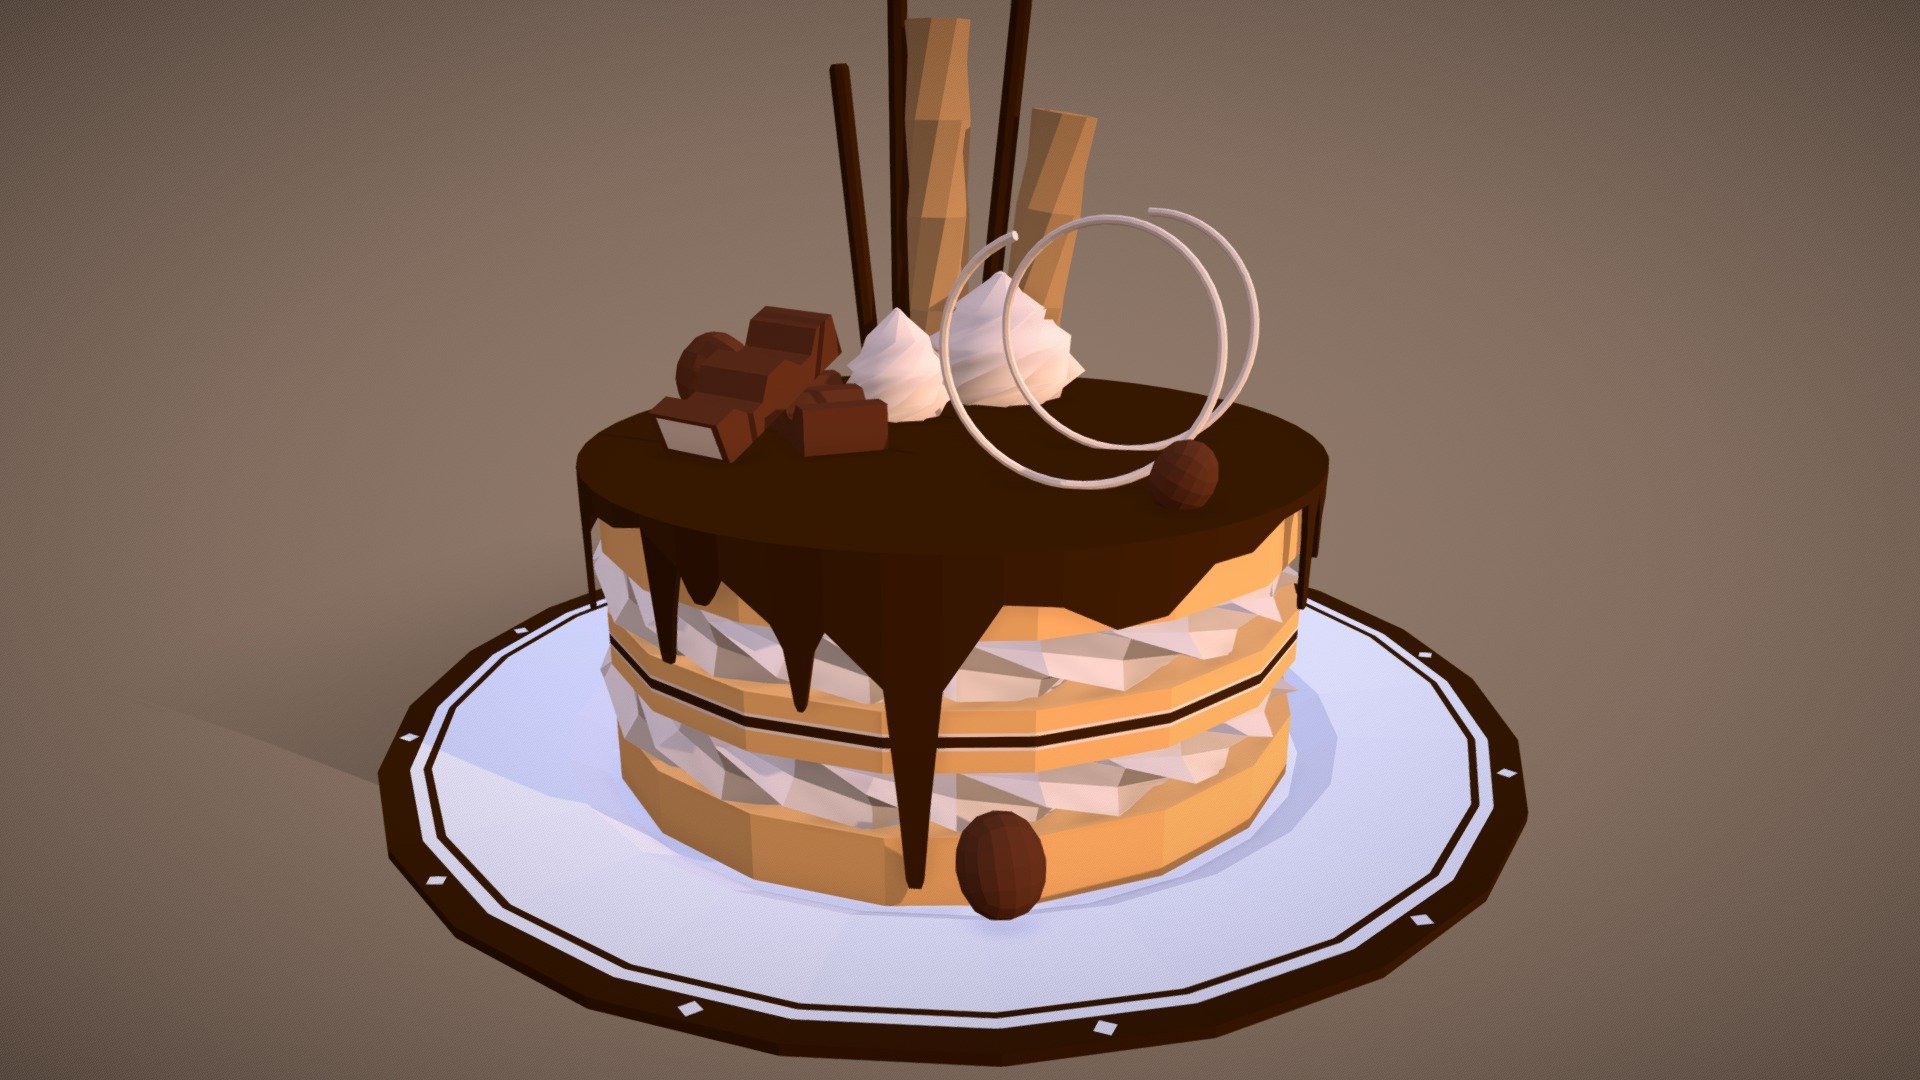 3d model of birthday cake - 3ds max - YouTube